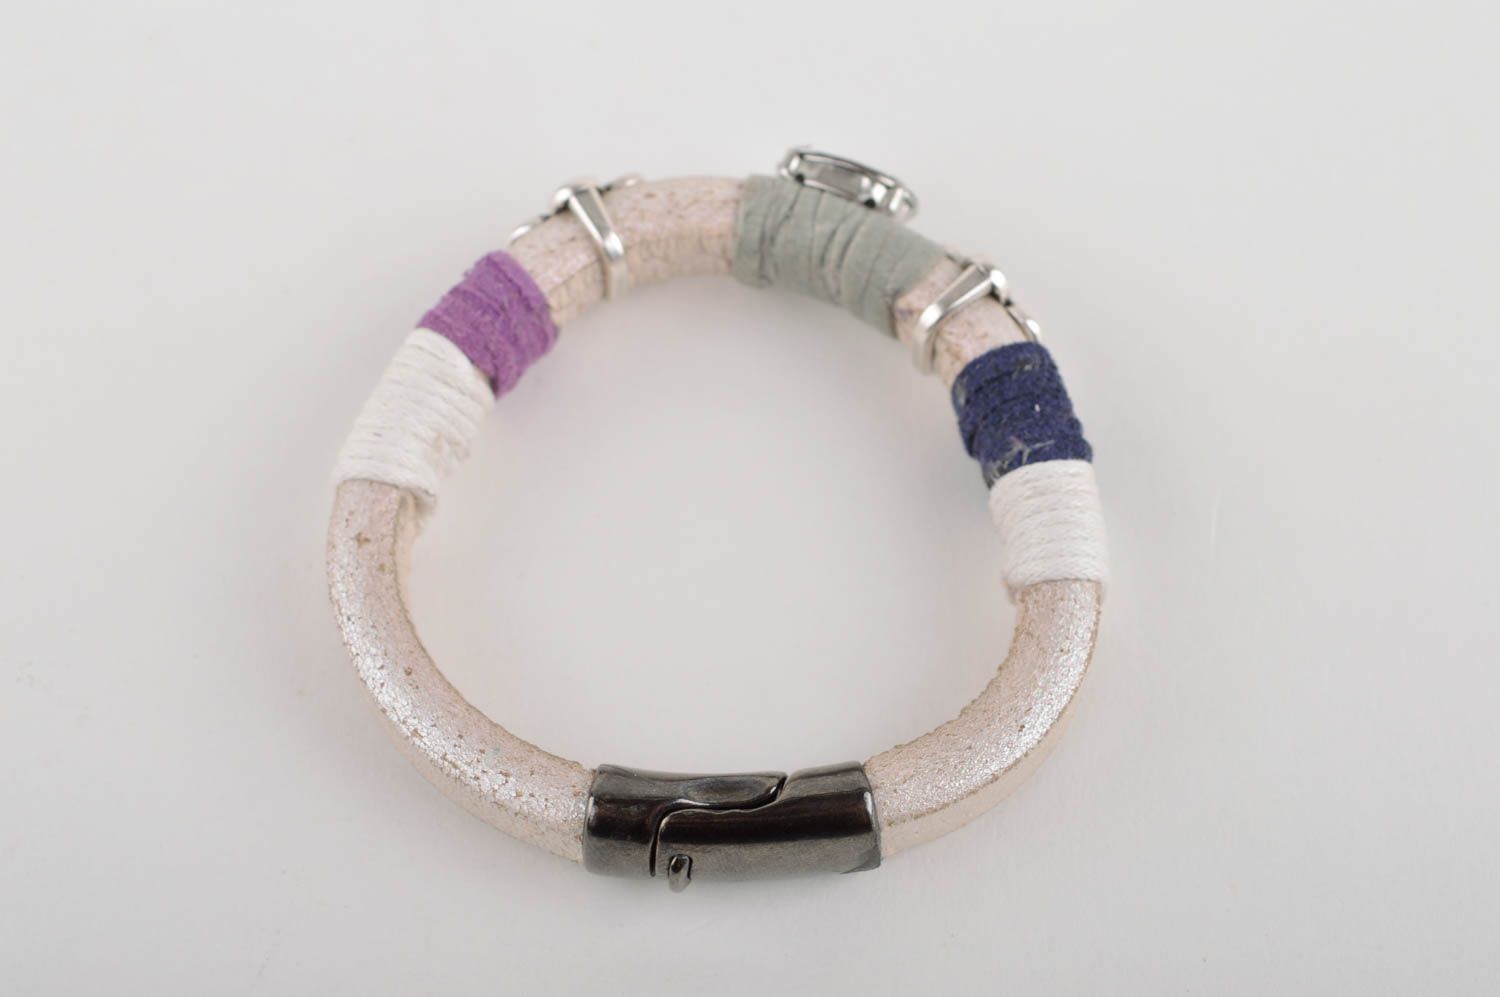 Stylish handmade leather bracelet designs leather goods fashion trends photo 4